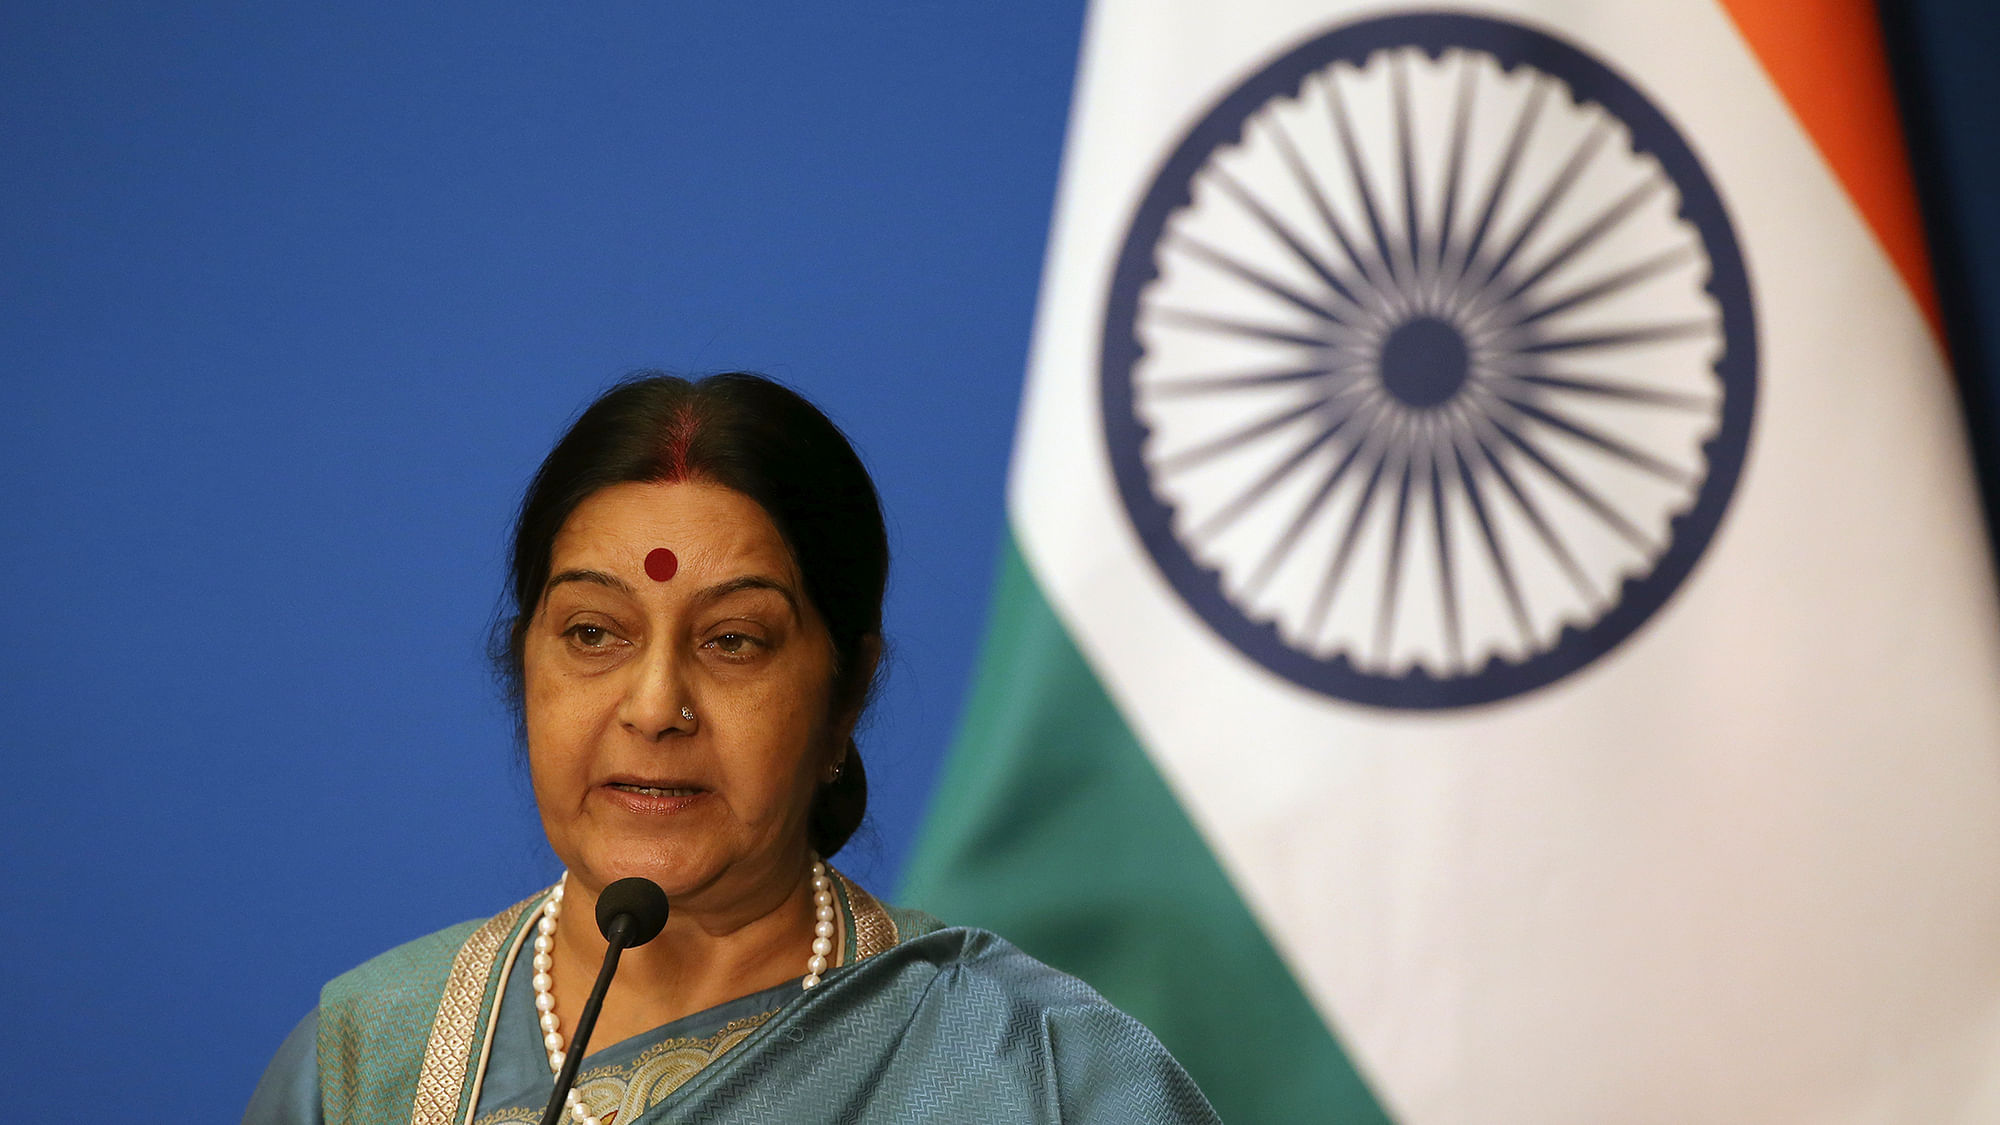 

External Affairs Minister Sushma Swaraj. (Photo: Reuters)